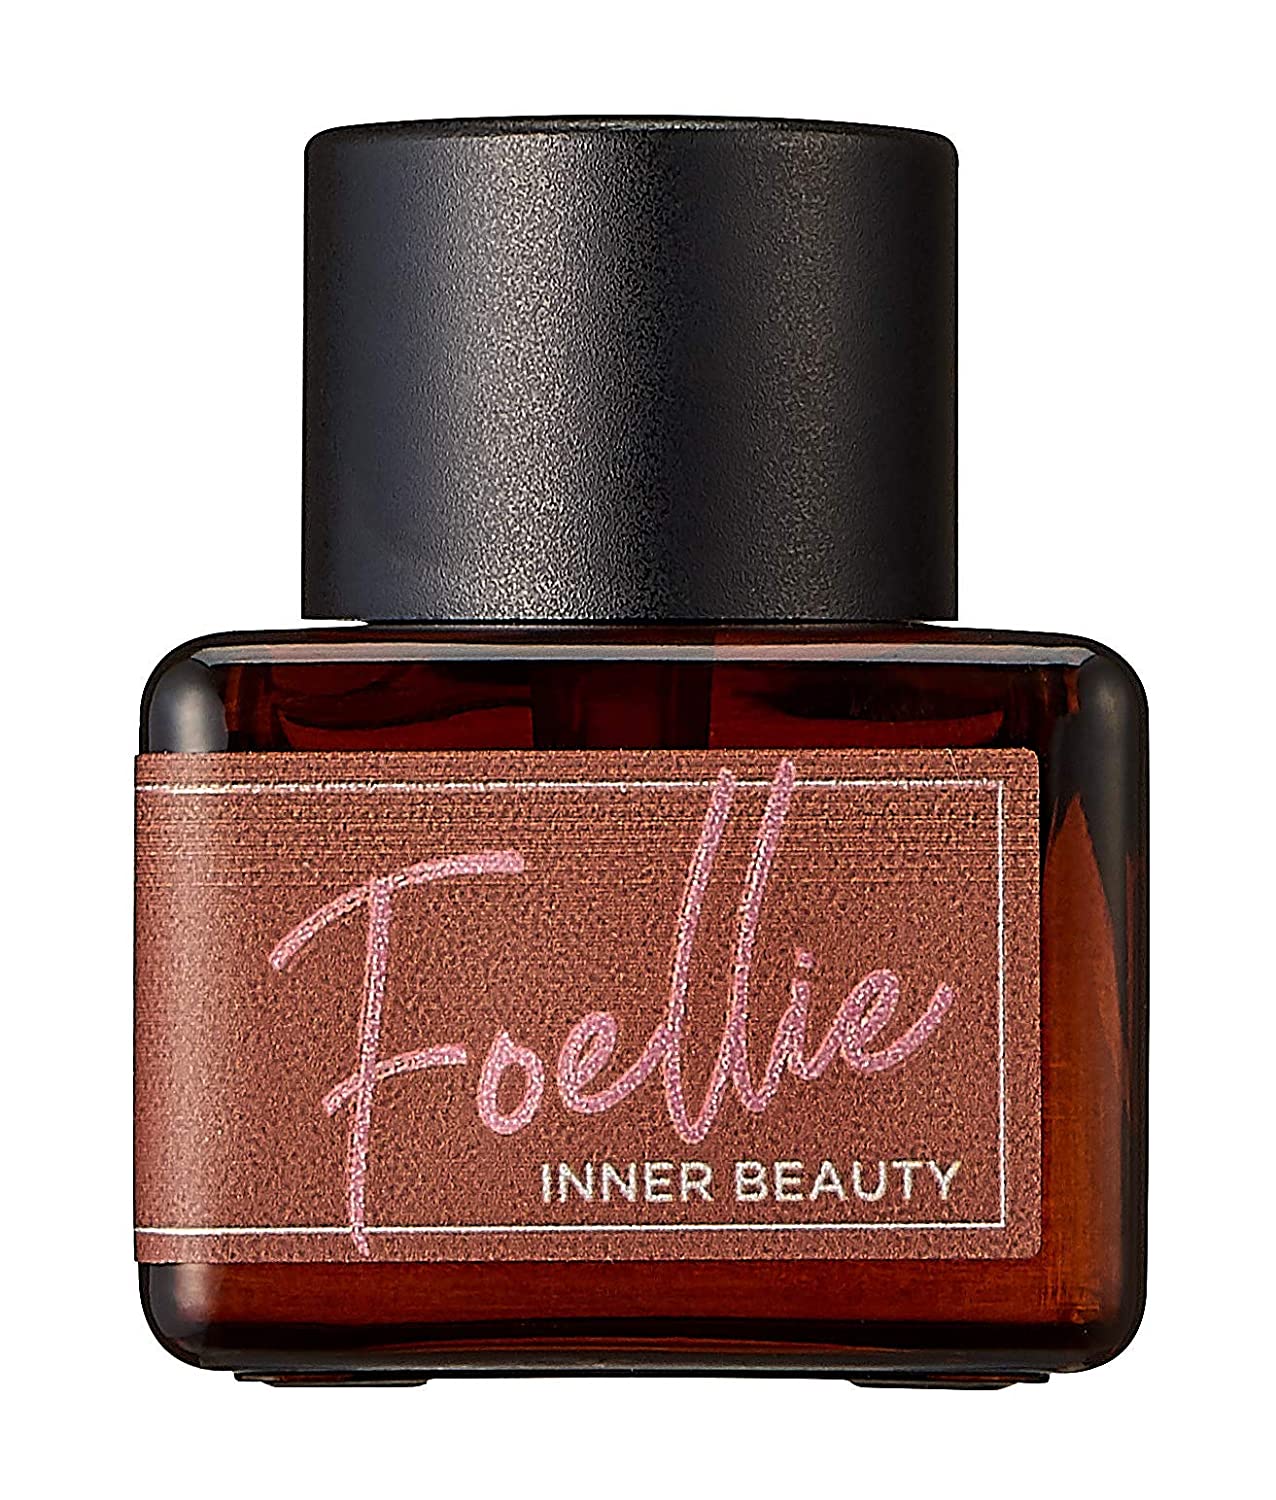 [FOELLIE] eau de foret - Feminine Inner Beauty Perfume (for Underwear), Woody Refresh Forest Scents Fragrance, 5ml(0.169 fl oz)